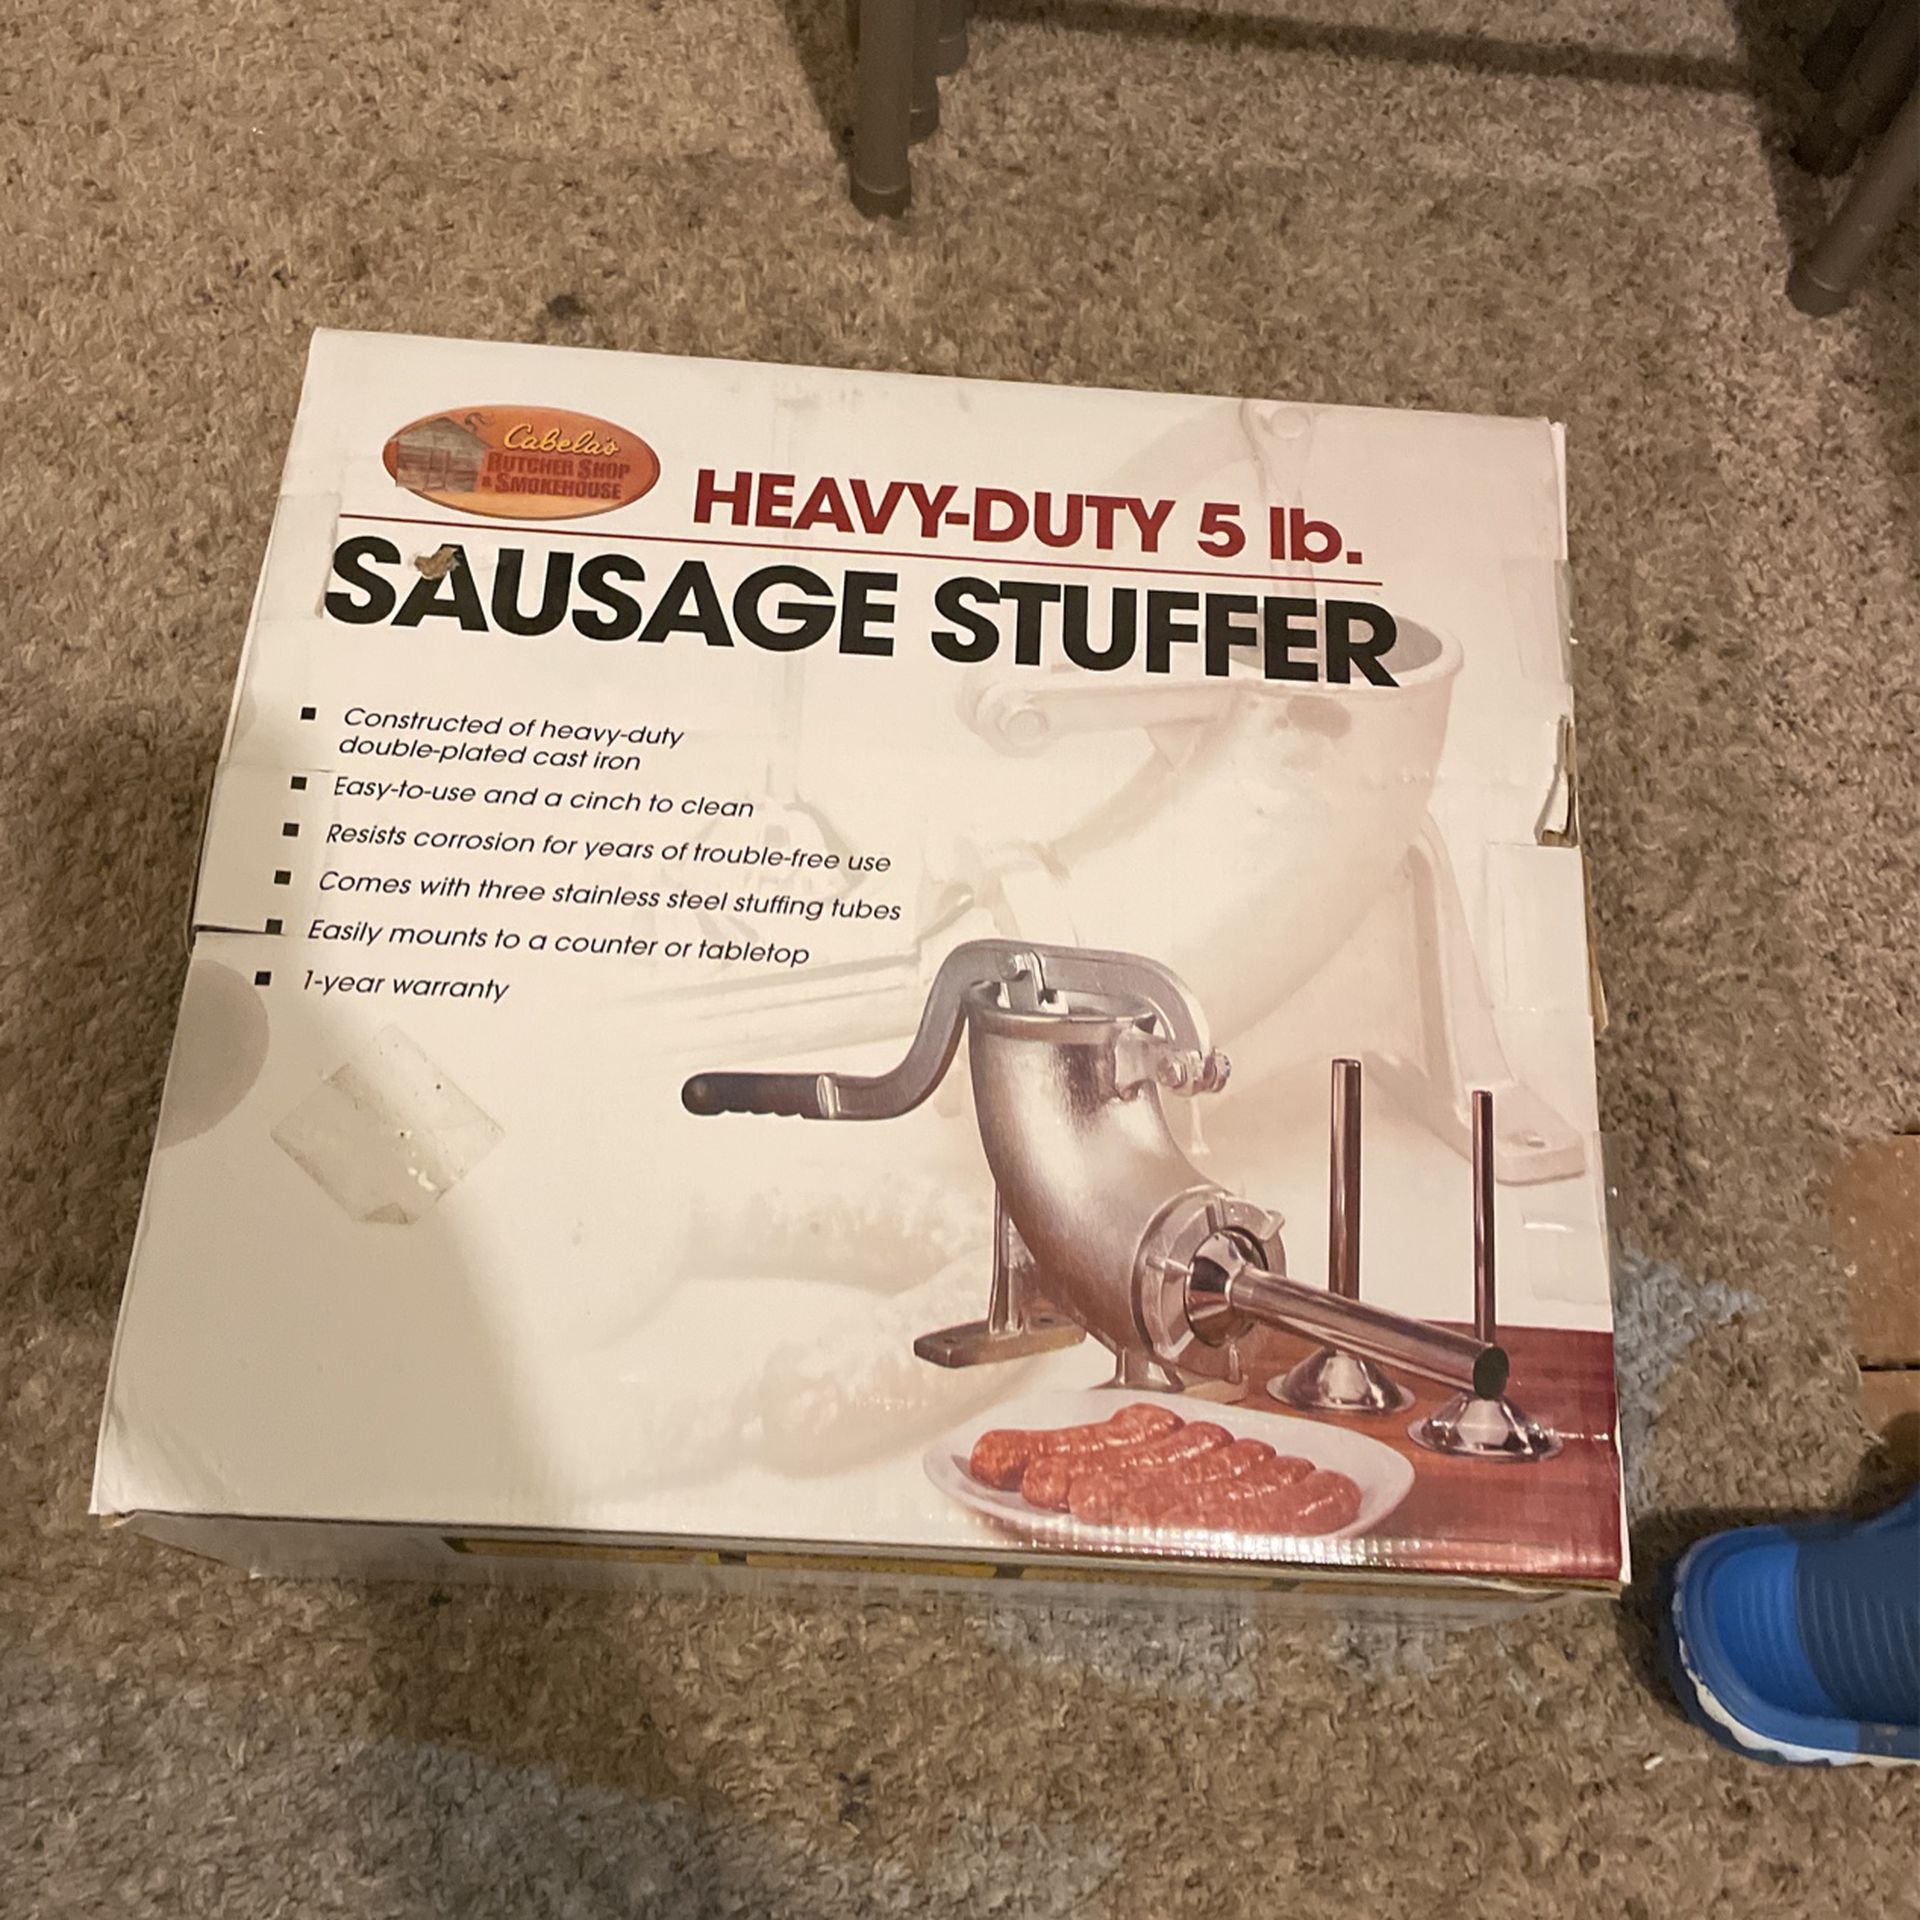 Cabela's Heavy-Duty Sausage Stuffer